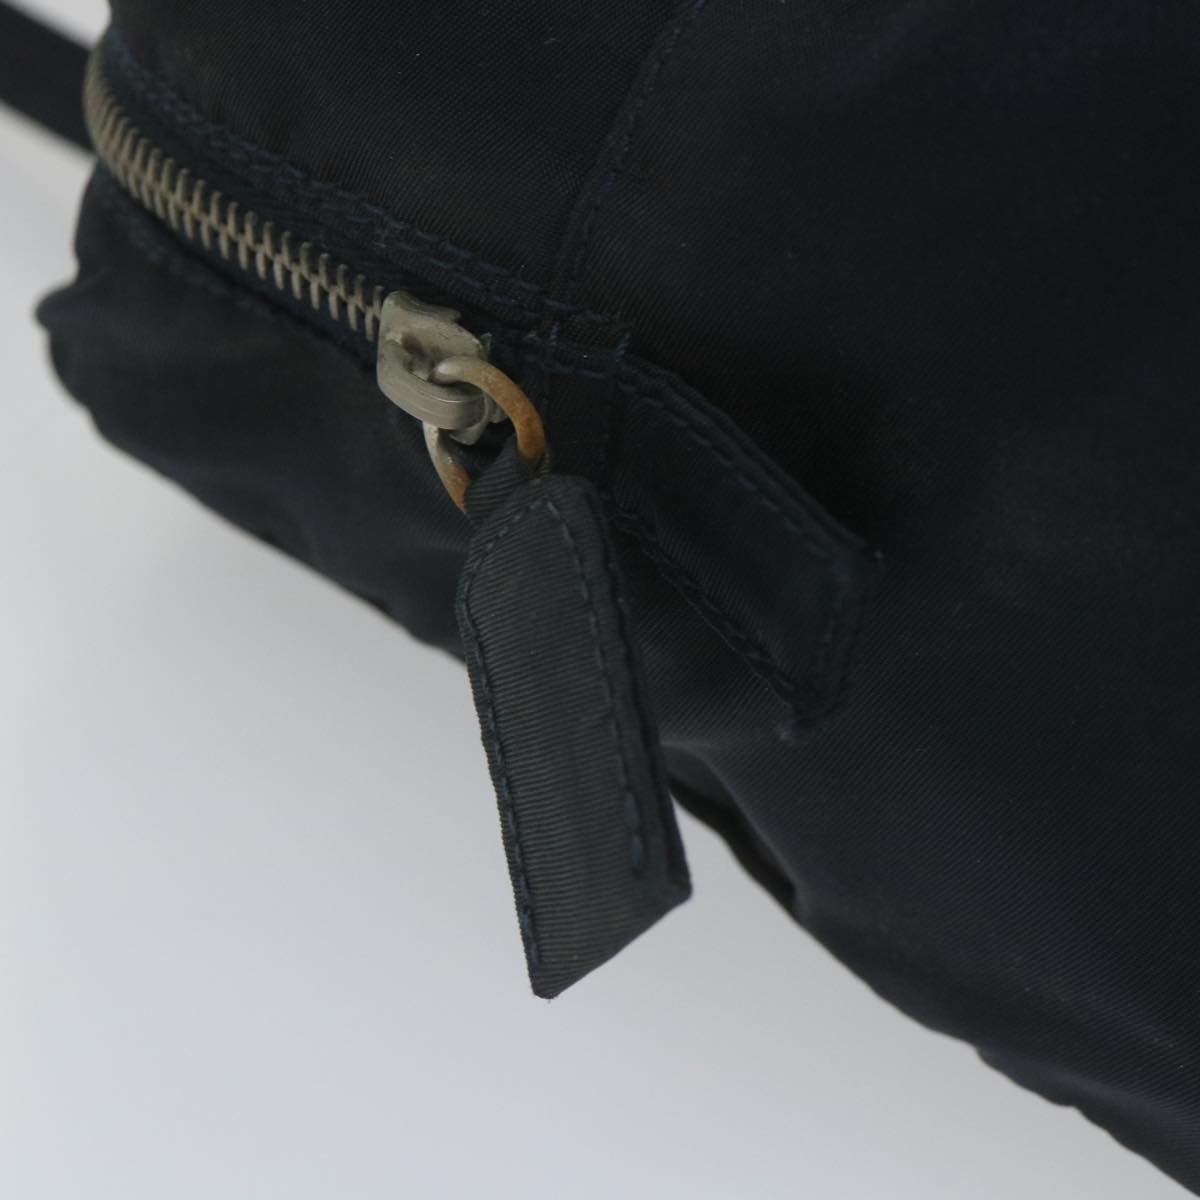 PRADA Hand Bag Nylon Navy Auth bs9860